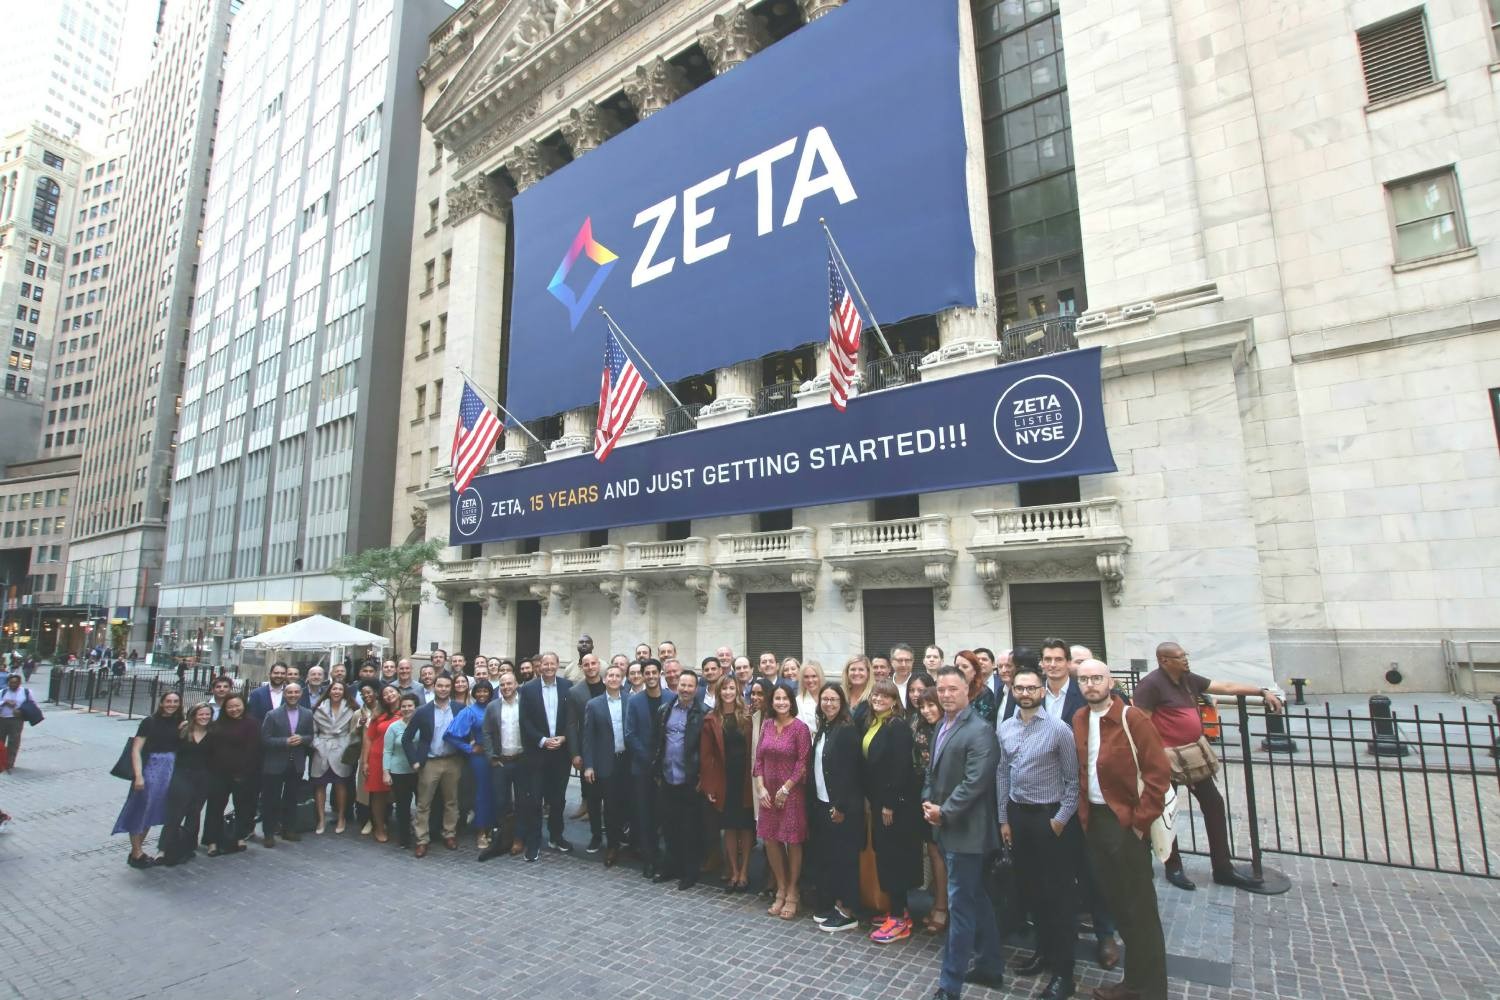 Zeta celebrates its 15th Anniversary!